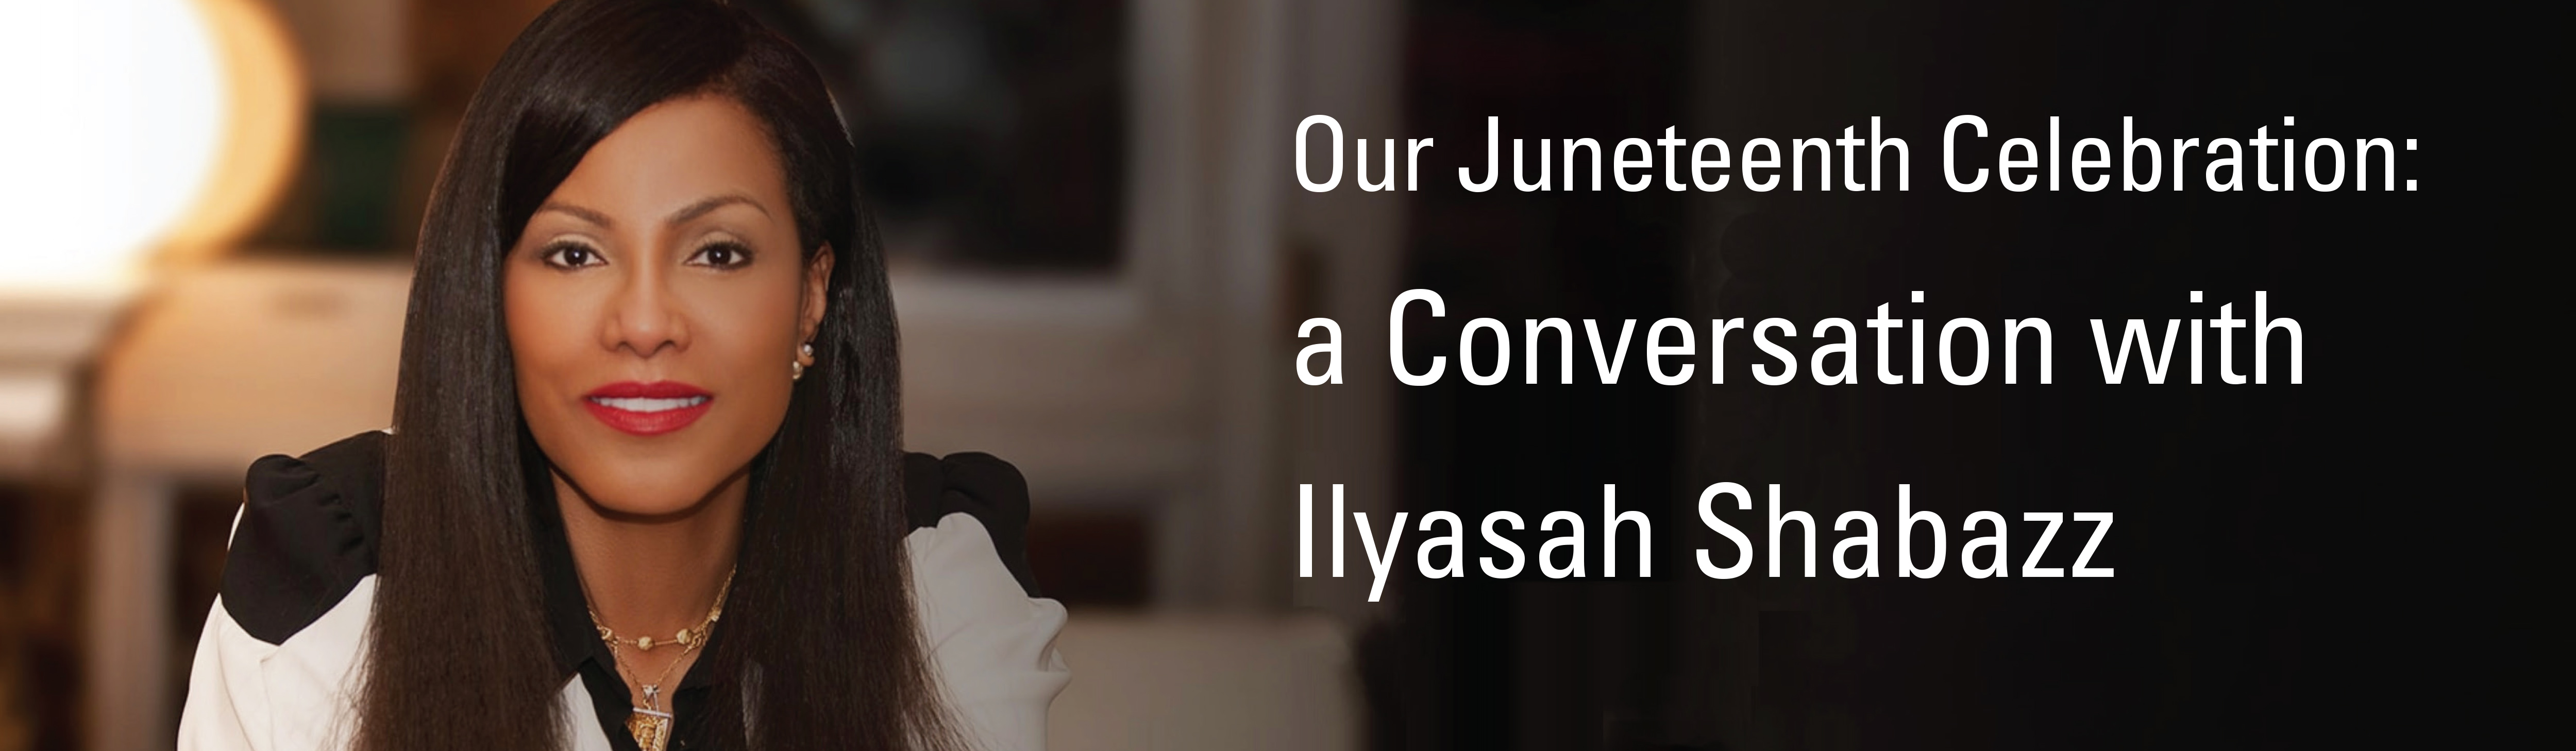 Our Juneteenth Celebration: a Conversation with Ilyasah Shabazz 